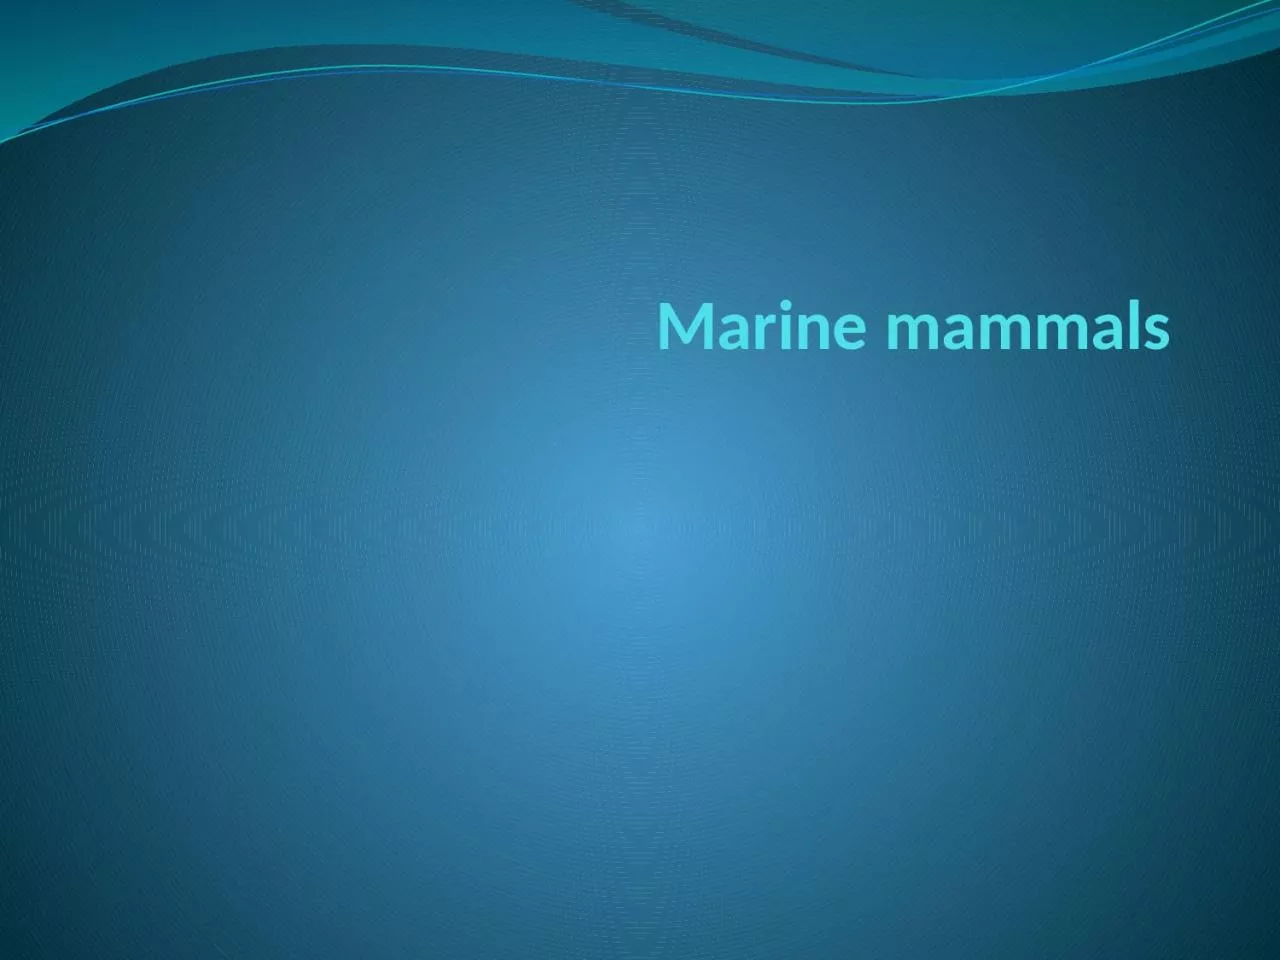   Marine mammals Introduction